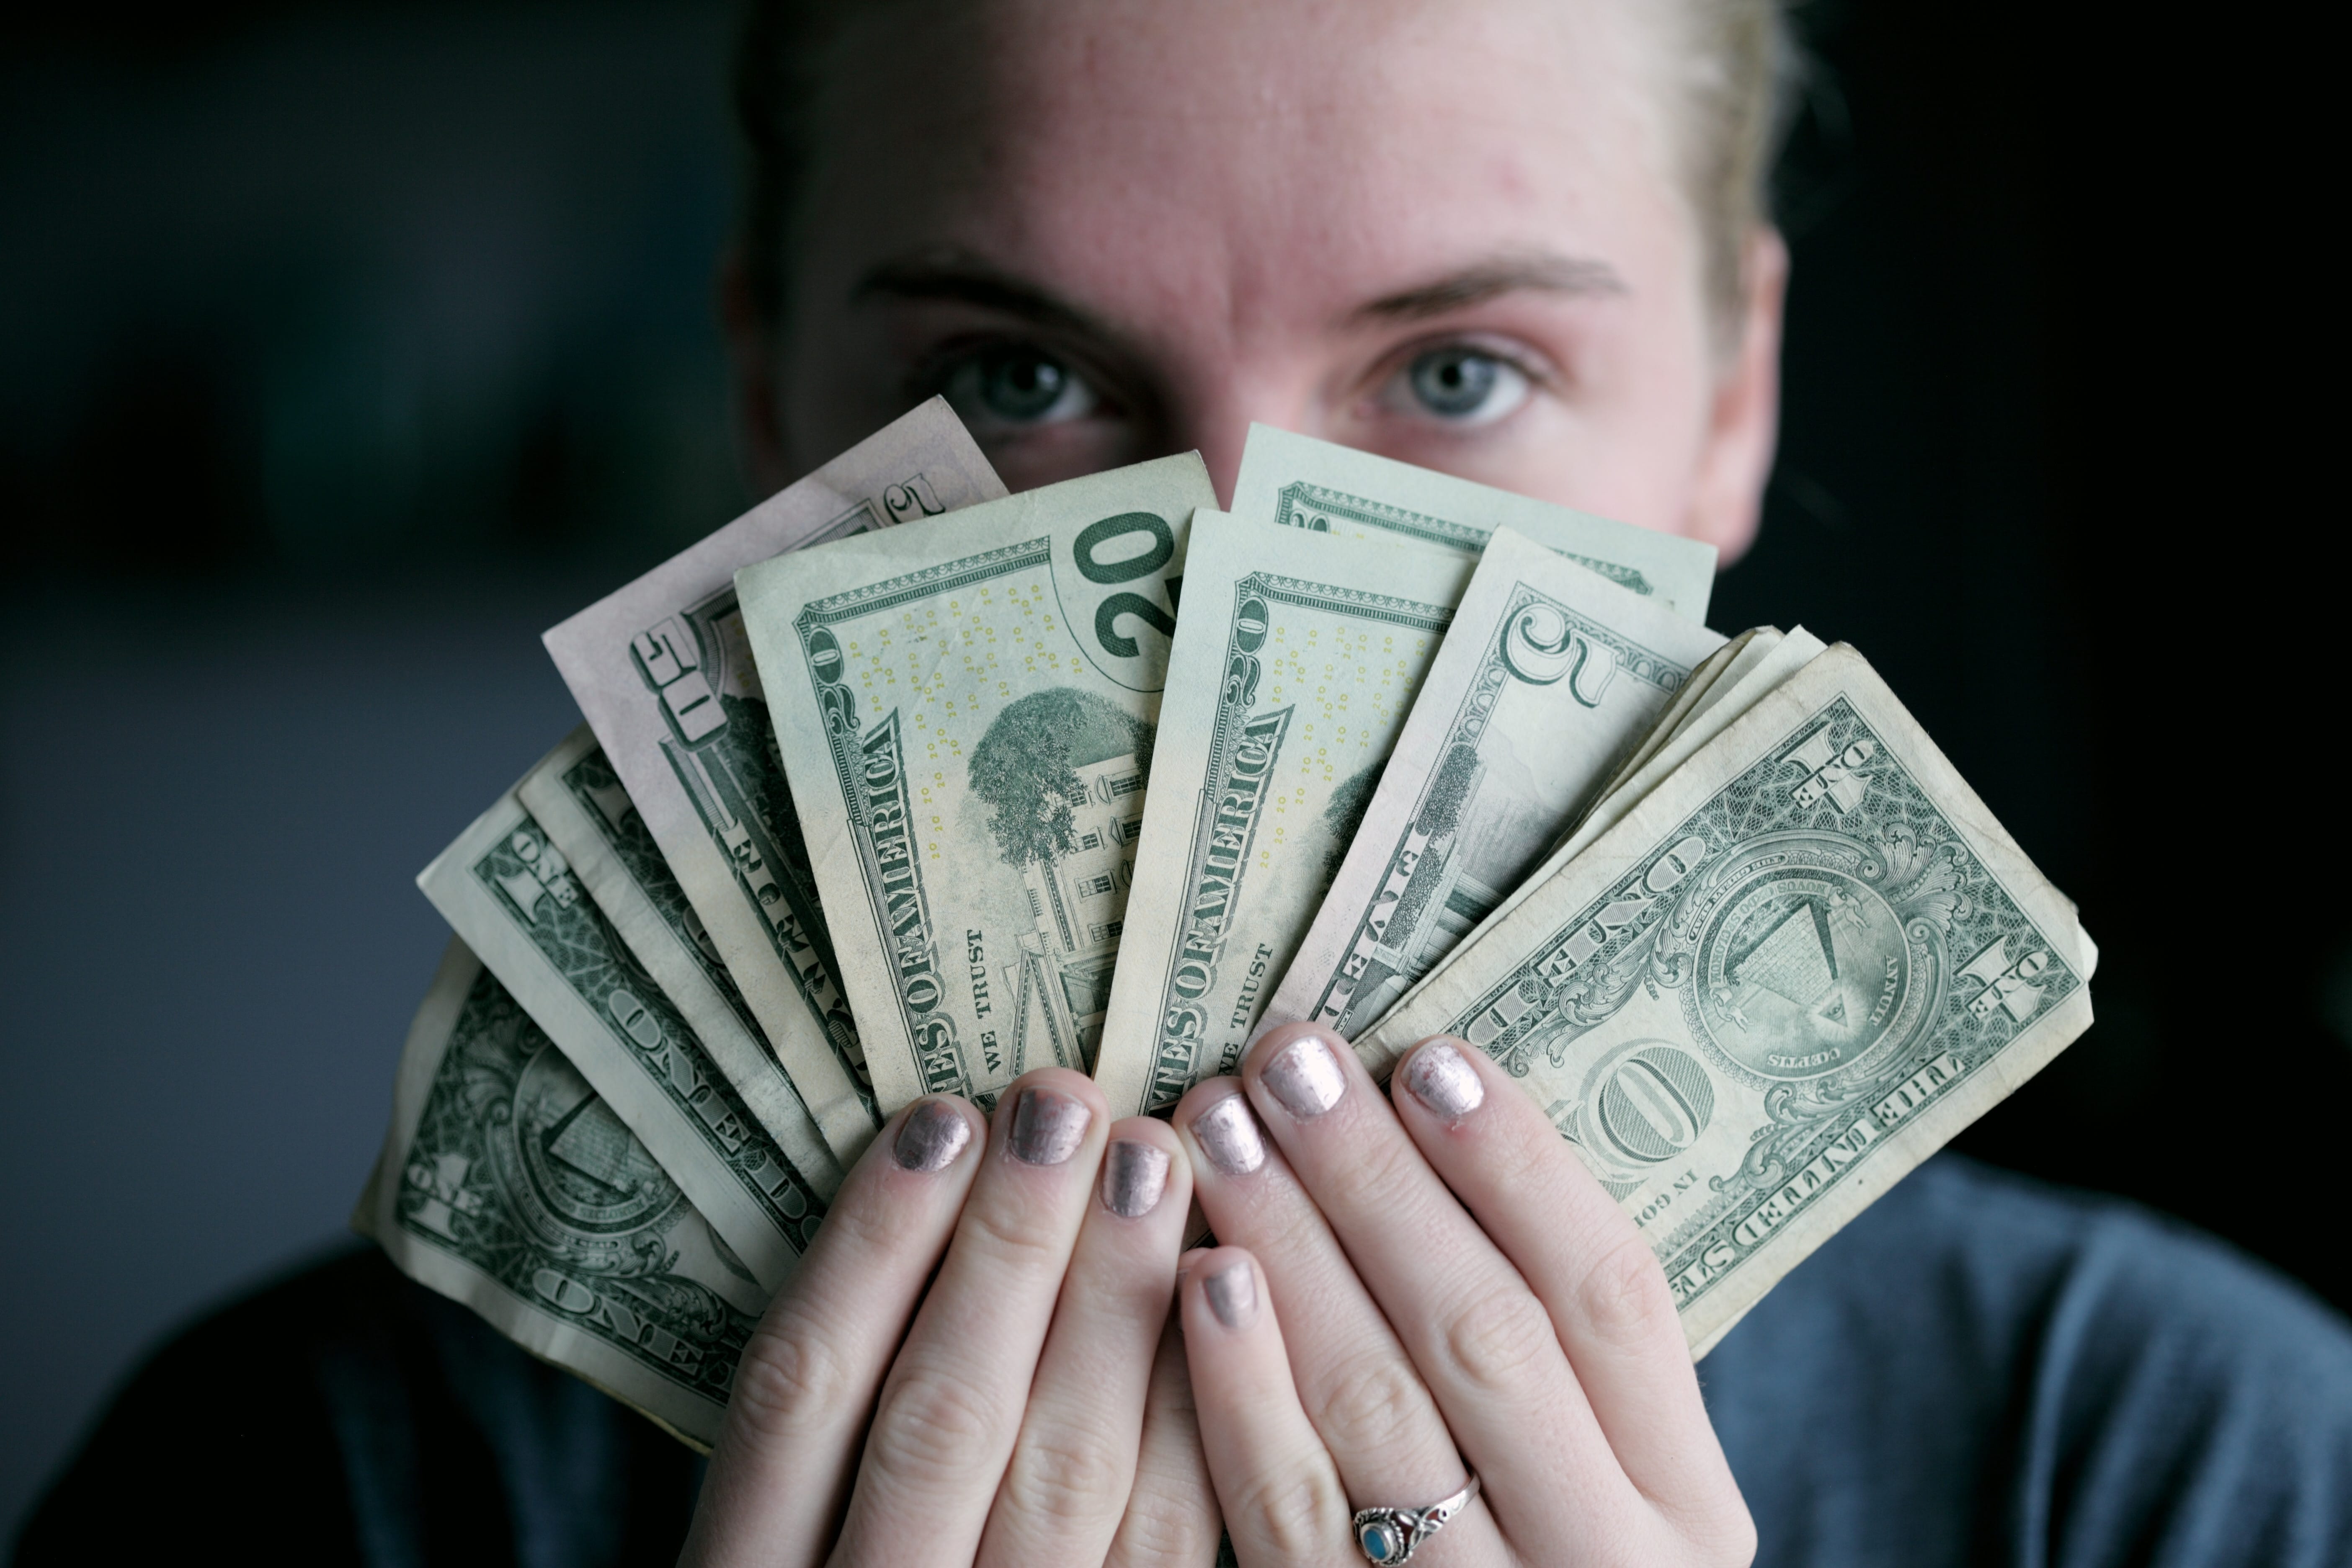 Young woman holding money; image by Sharon McCutcheon, via Unsplash.com.